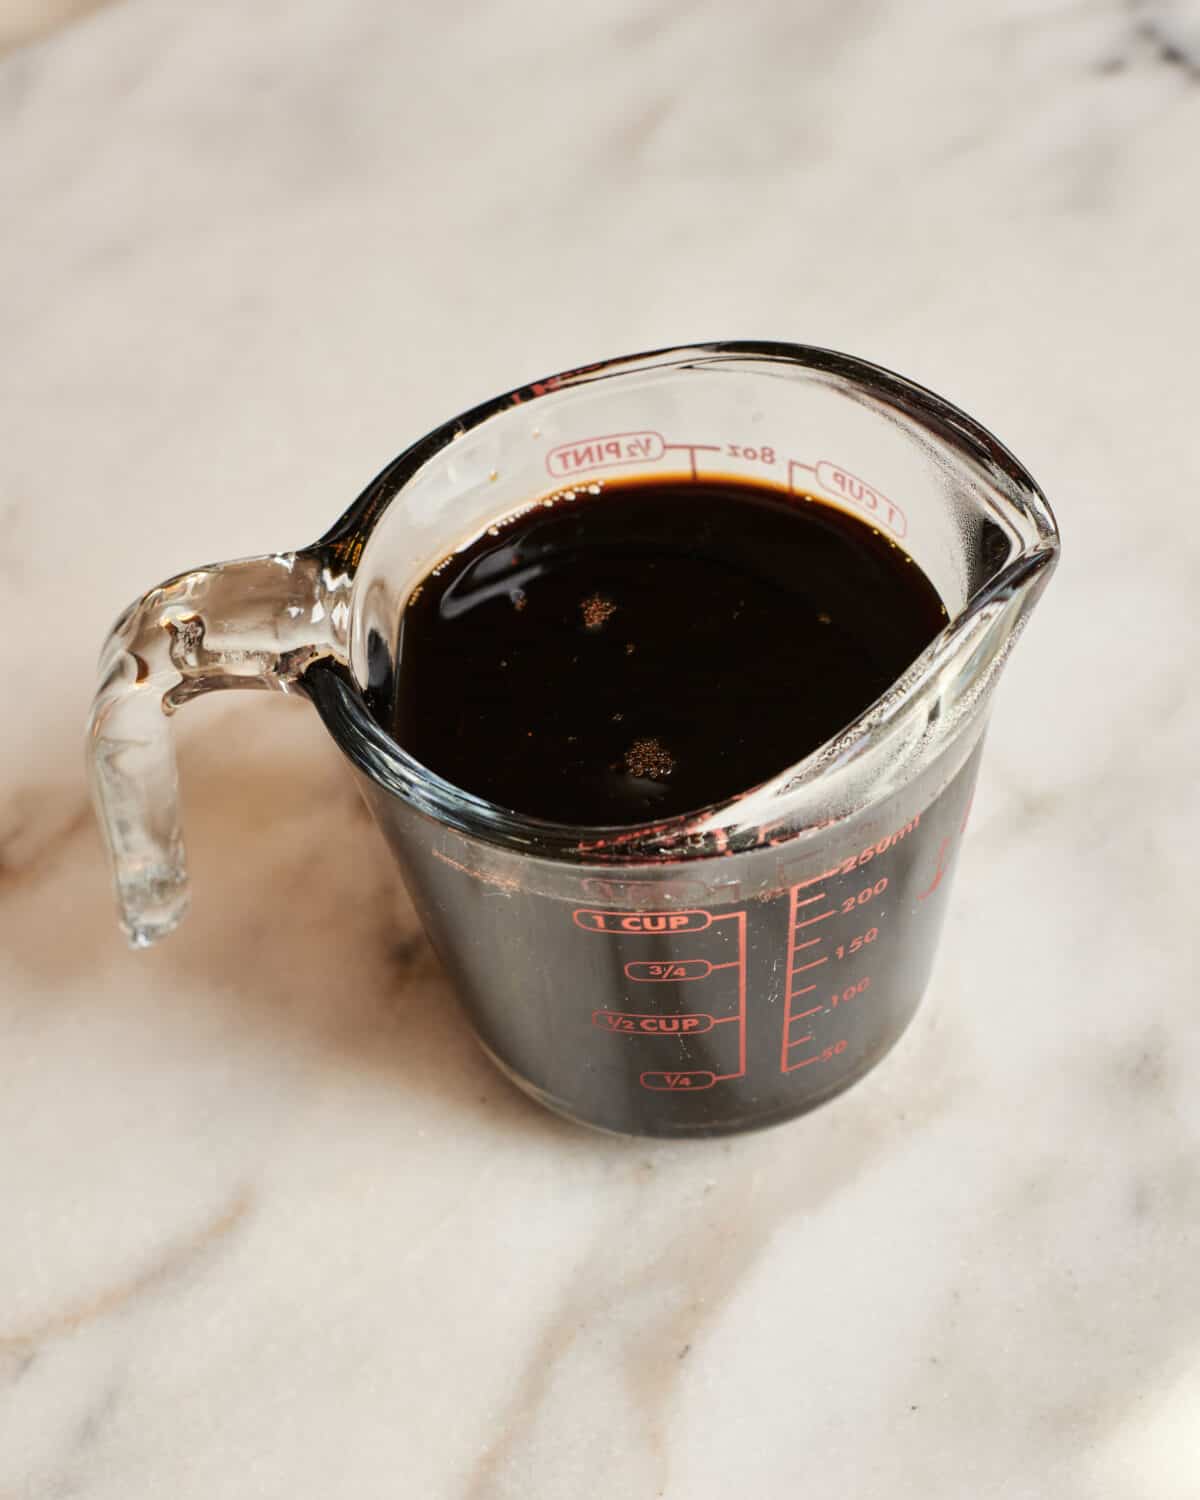 Measuring cup with Homemade Teriyaki Sauce. 